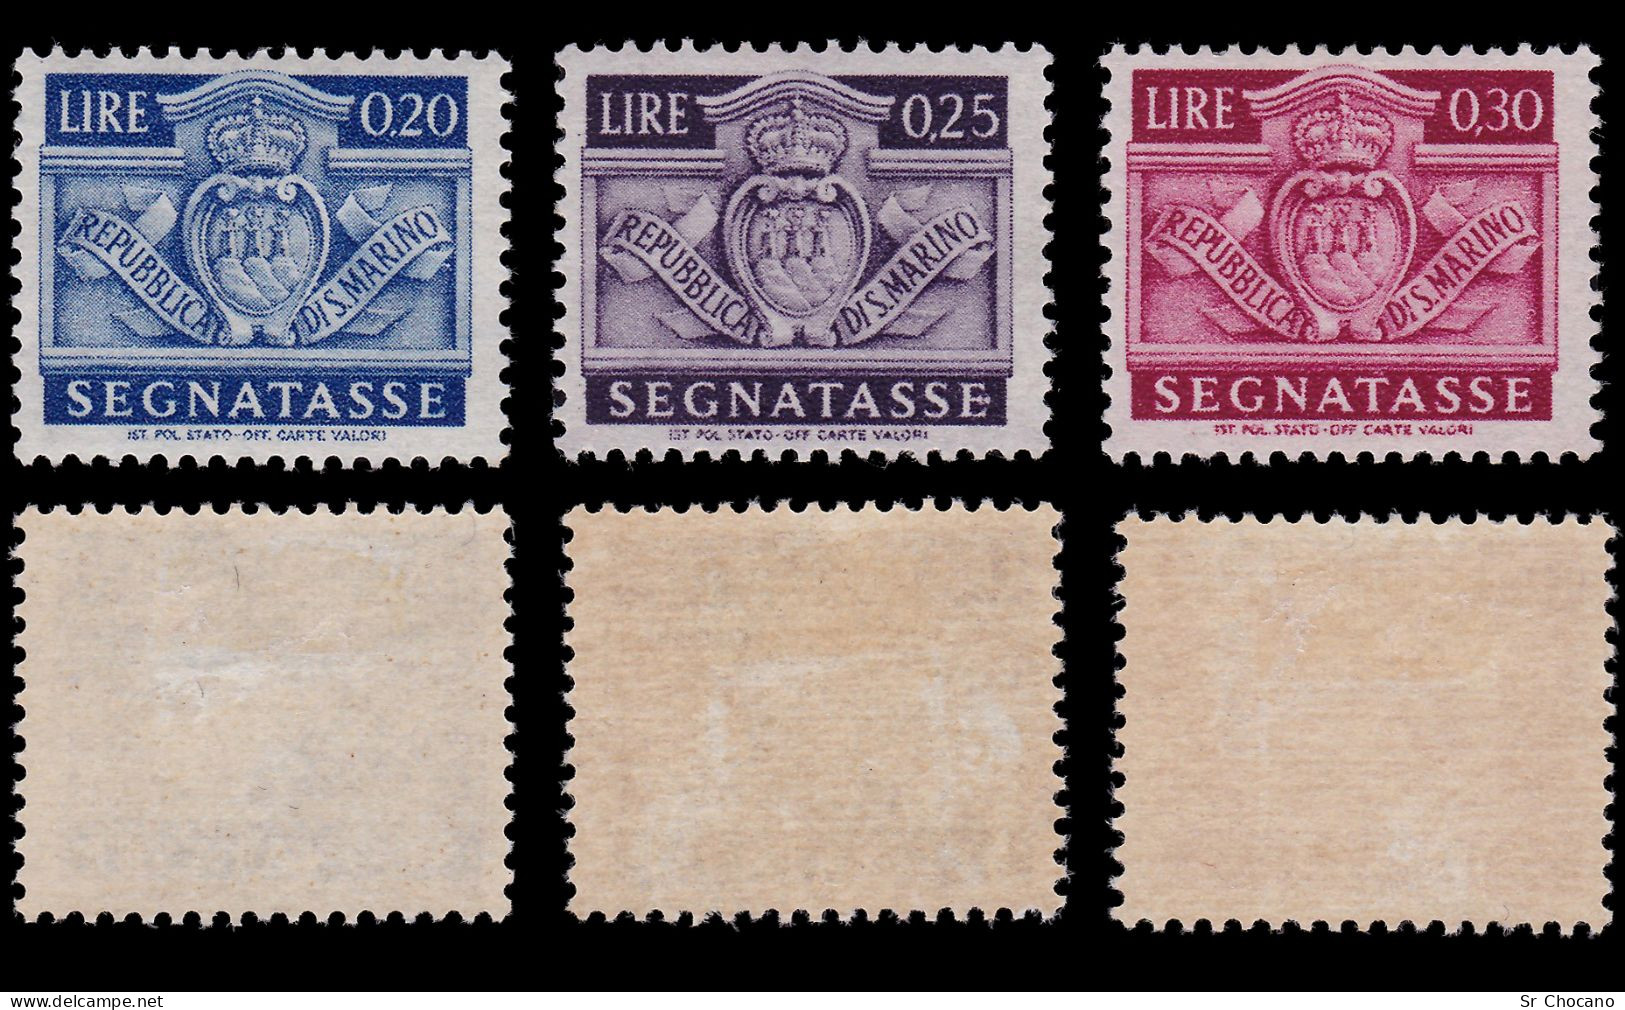 SAN MARINO POSTAGE DUE STAMPS.1945. SCOTT J65-J74.MH. - Unused Stamps